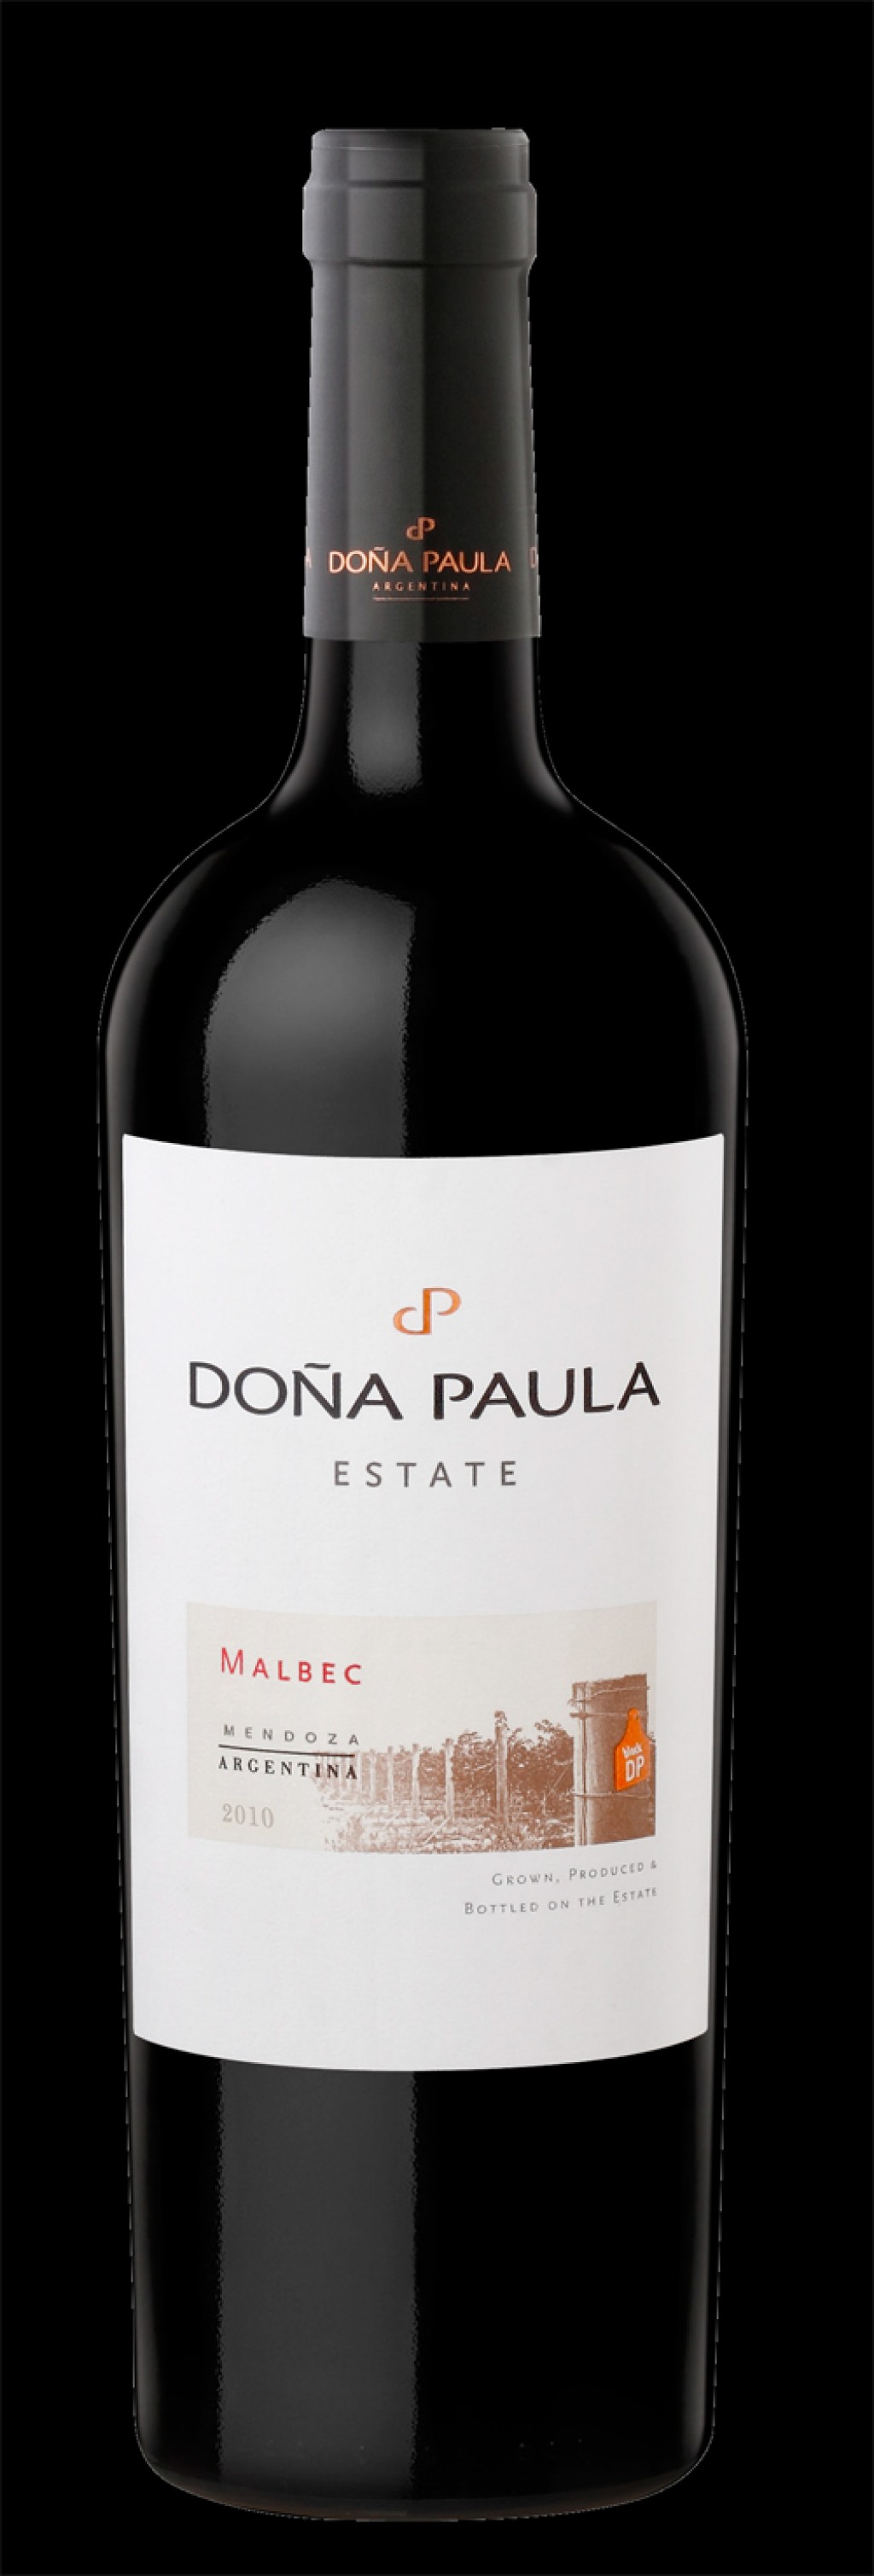 malbec wine from argentina